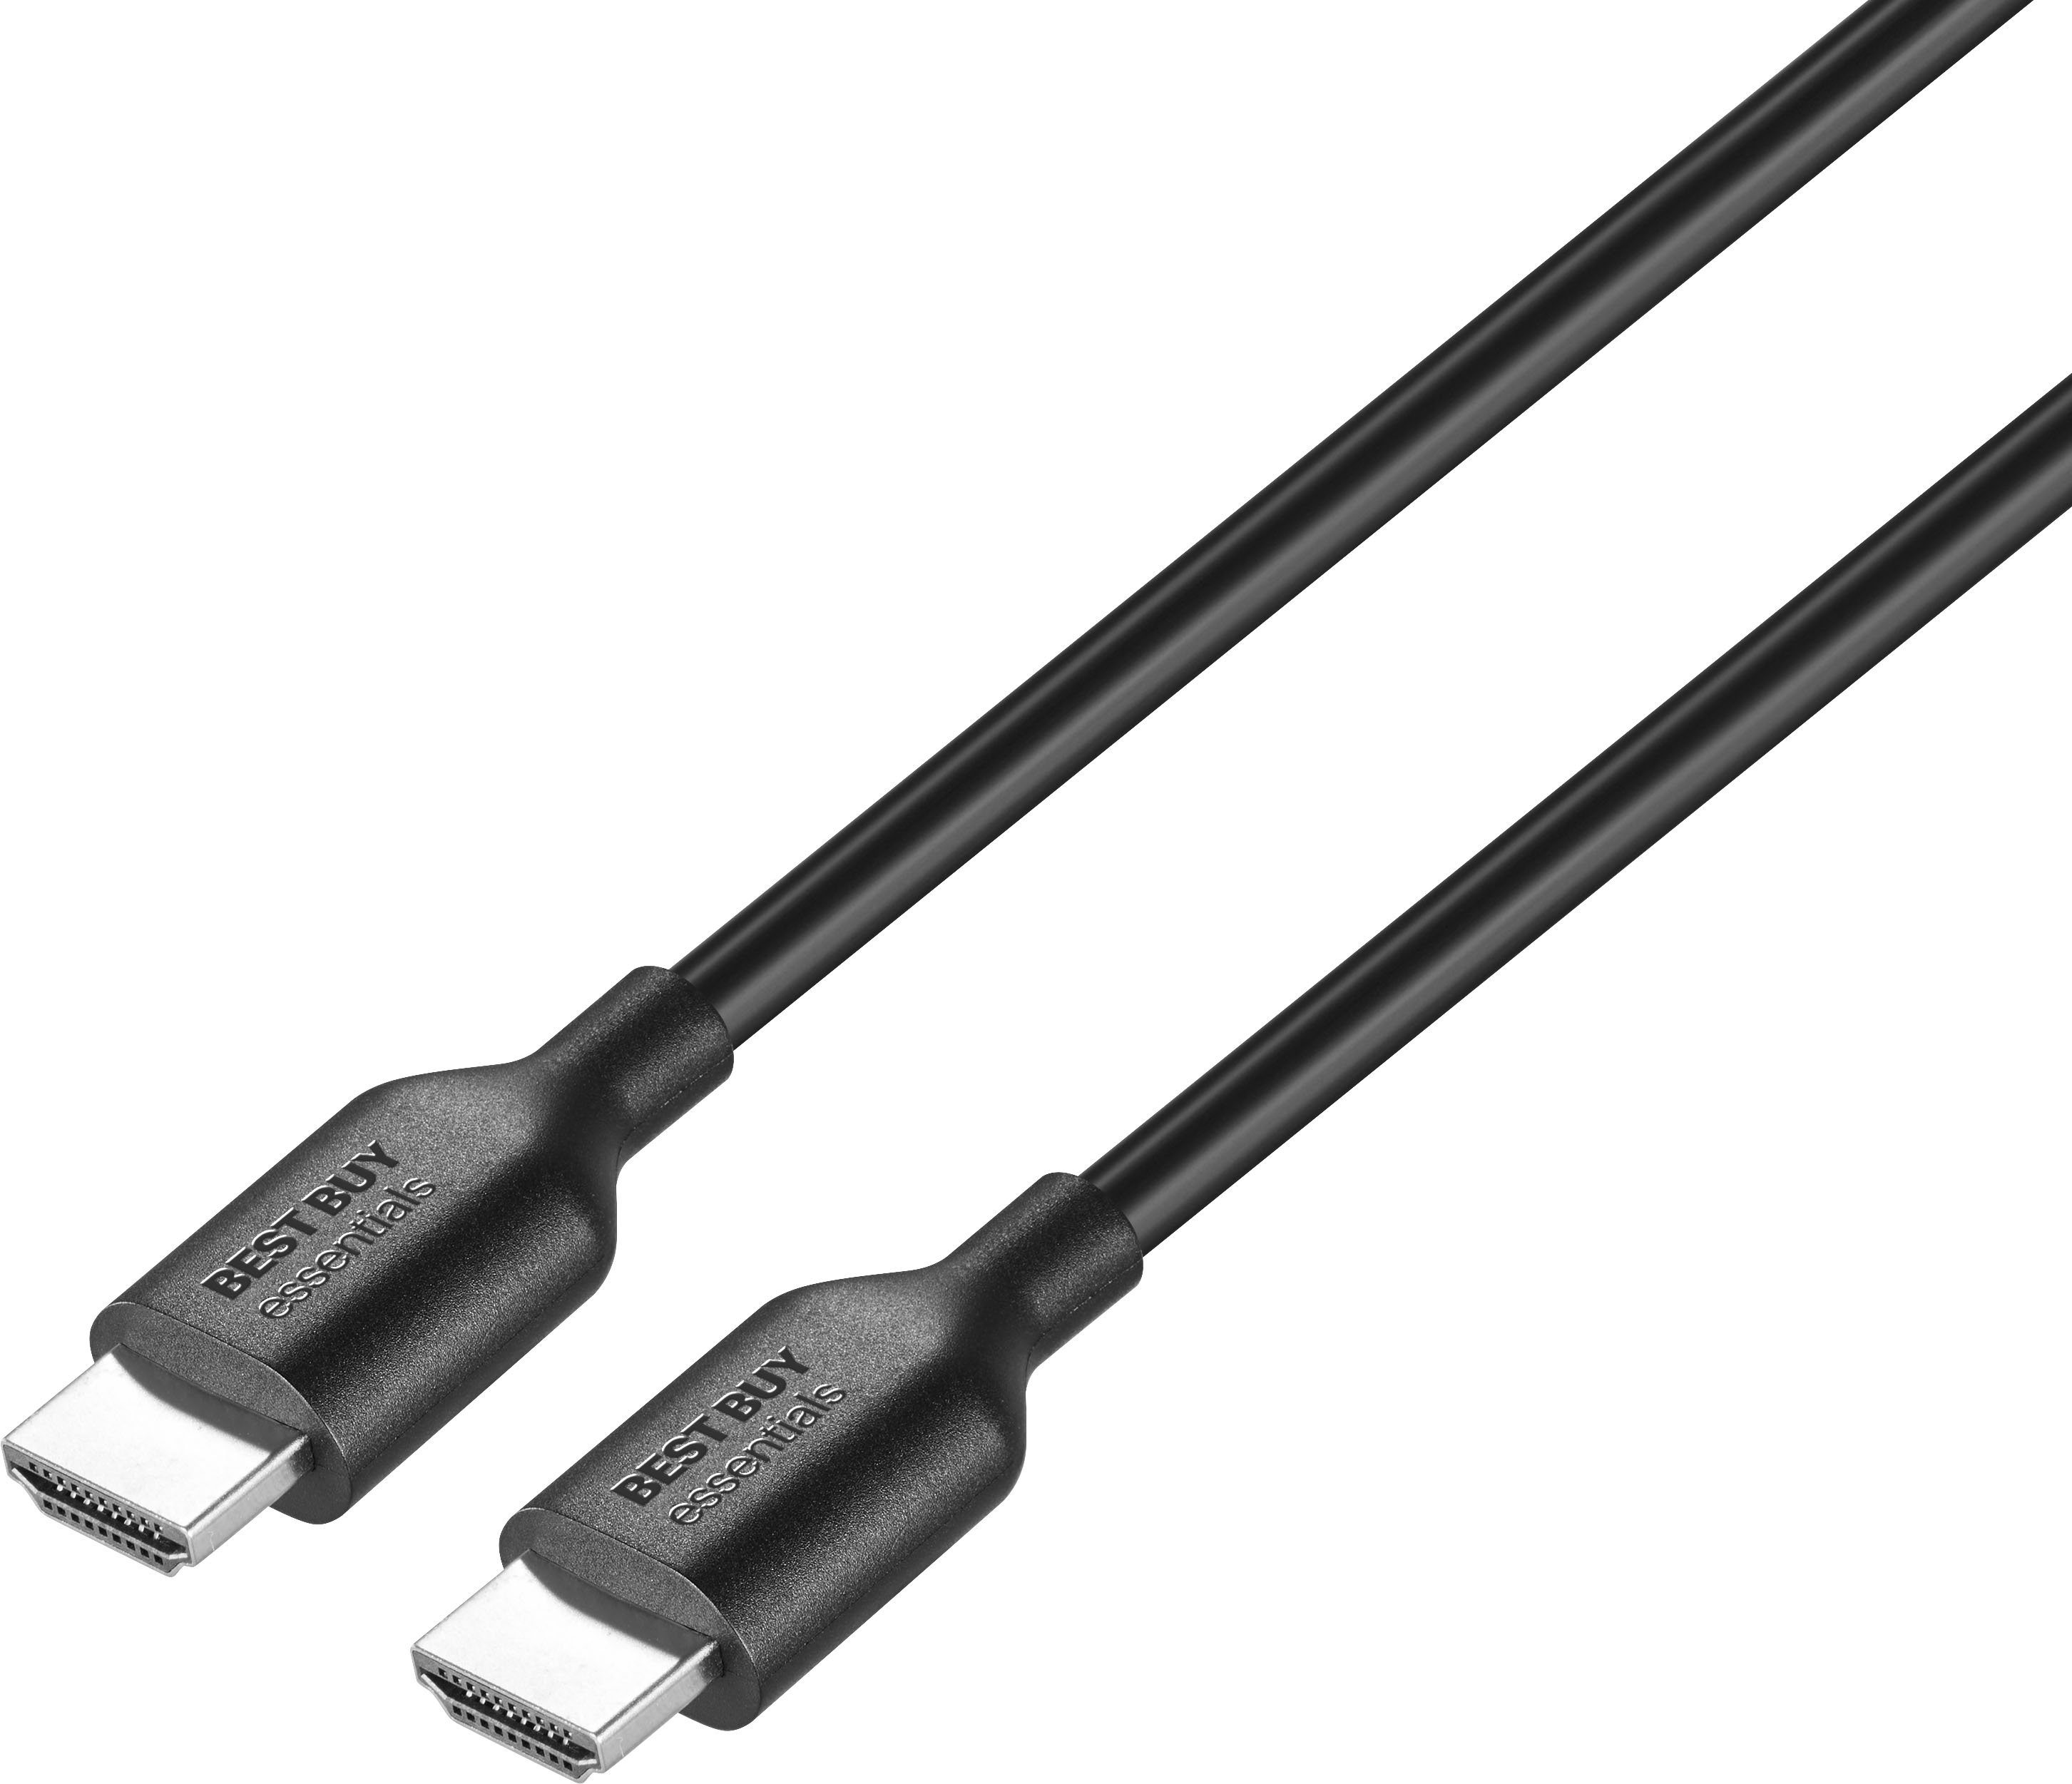 Cable HDMI Negro Belden con. B: HDMI Macho, long. 3m